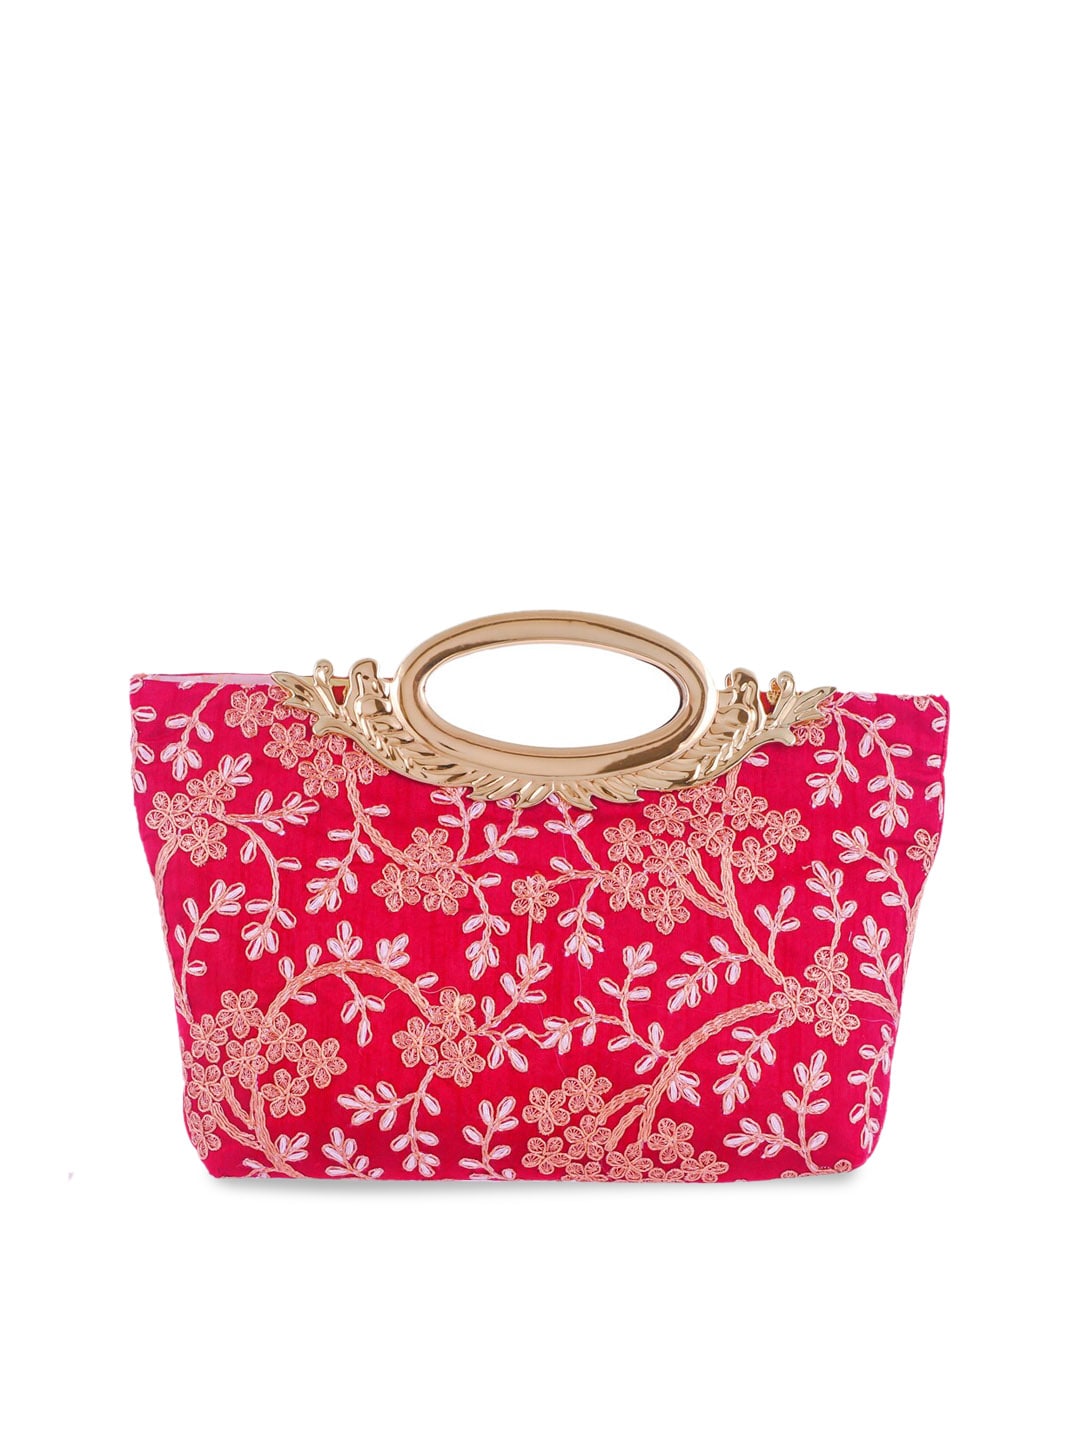 Kuber Industries Pink & Gold-Toned Embellished Handheld Bag Price in India